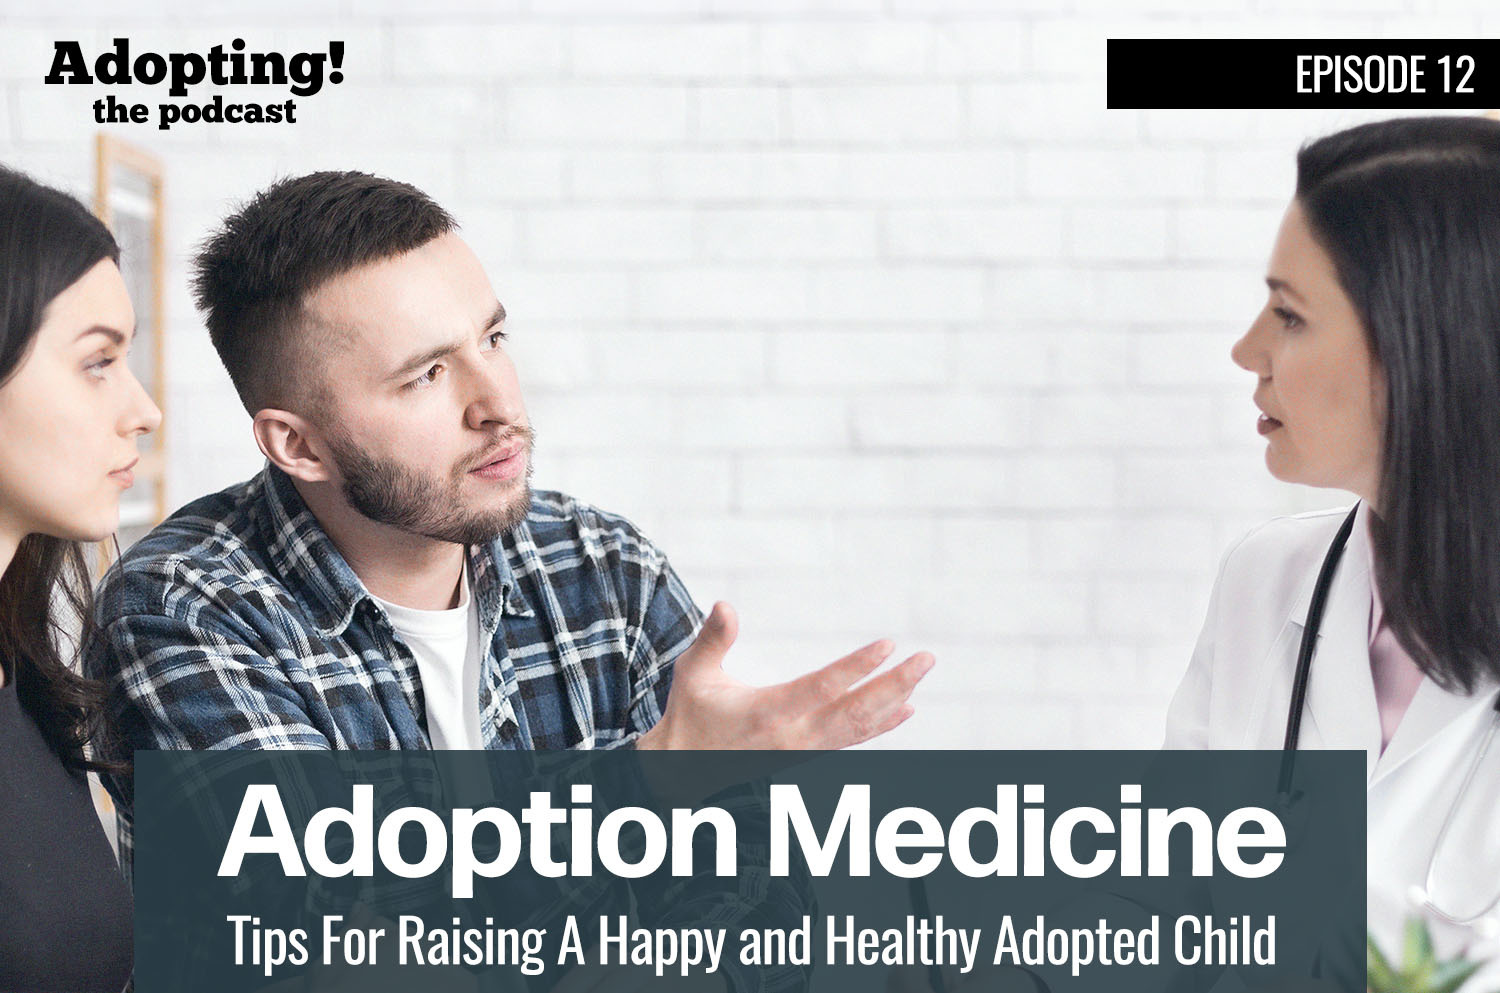 Adoption mediicine adopting podcast